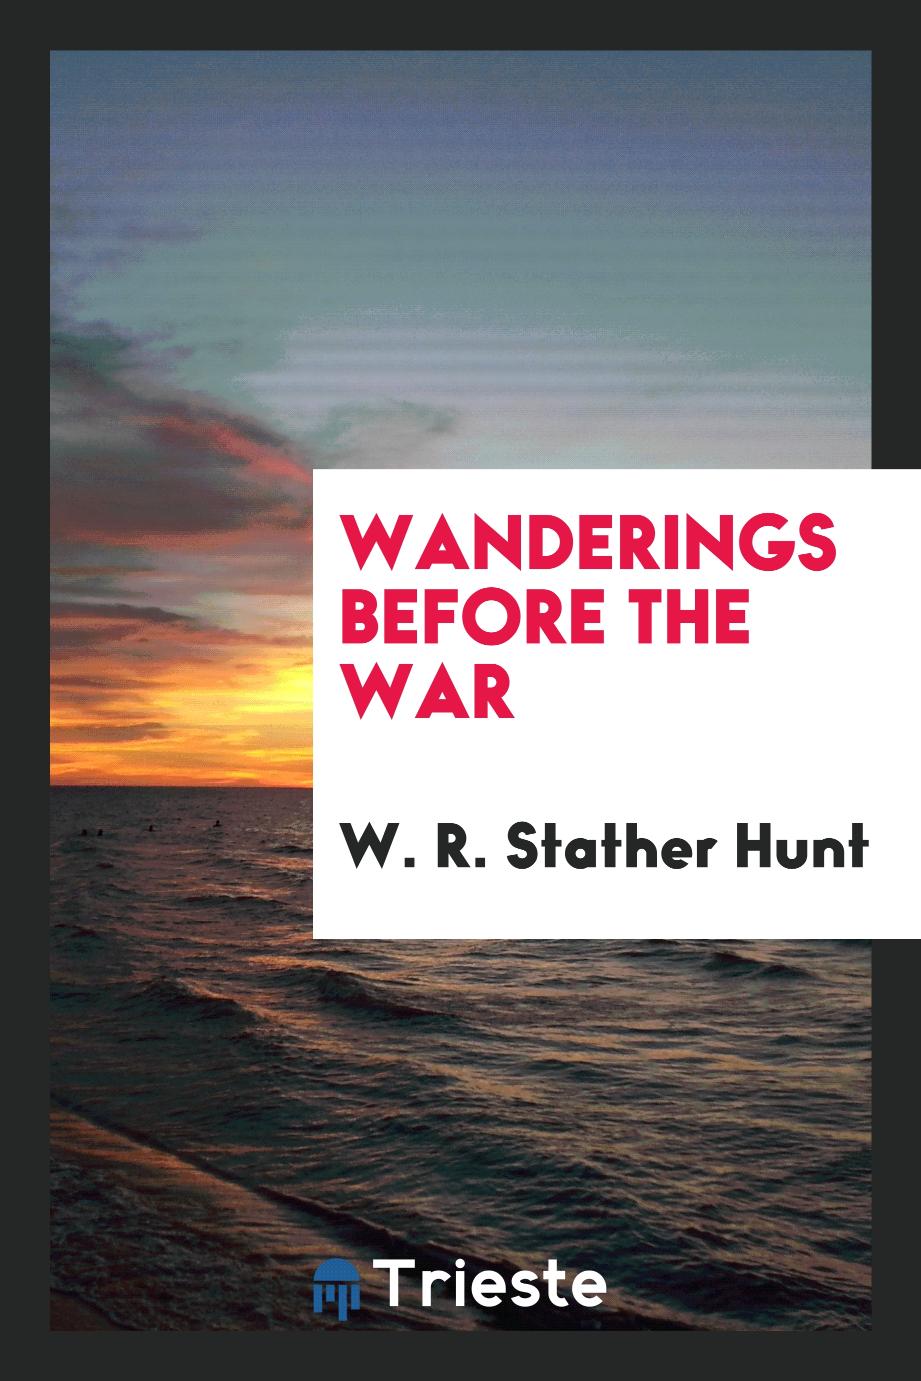 Wanderings before the war